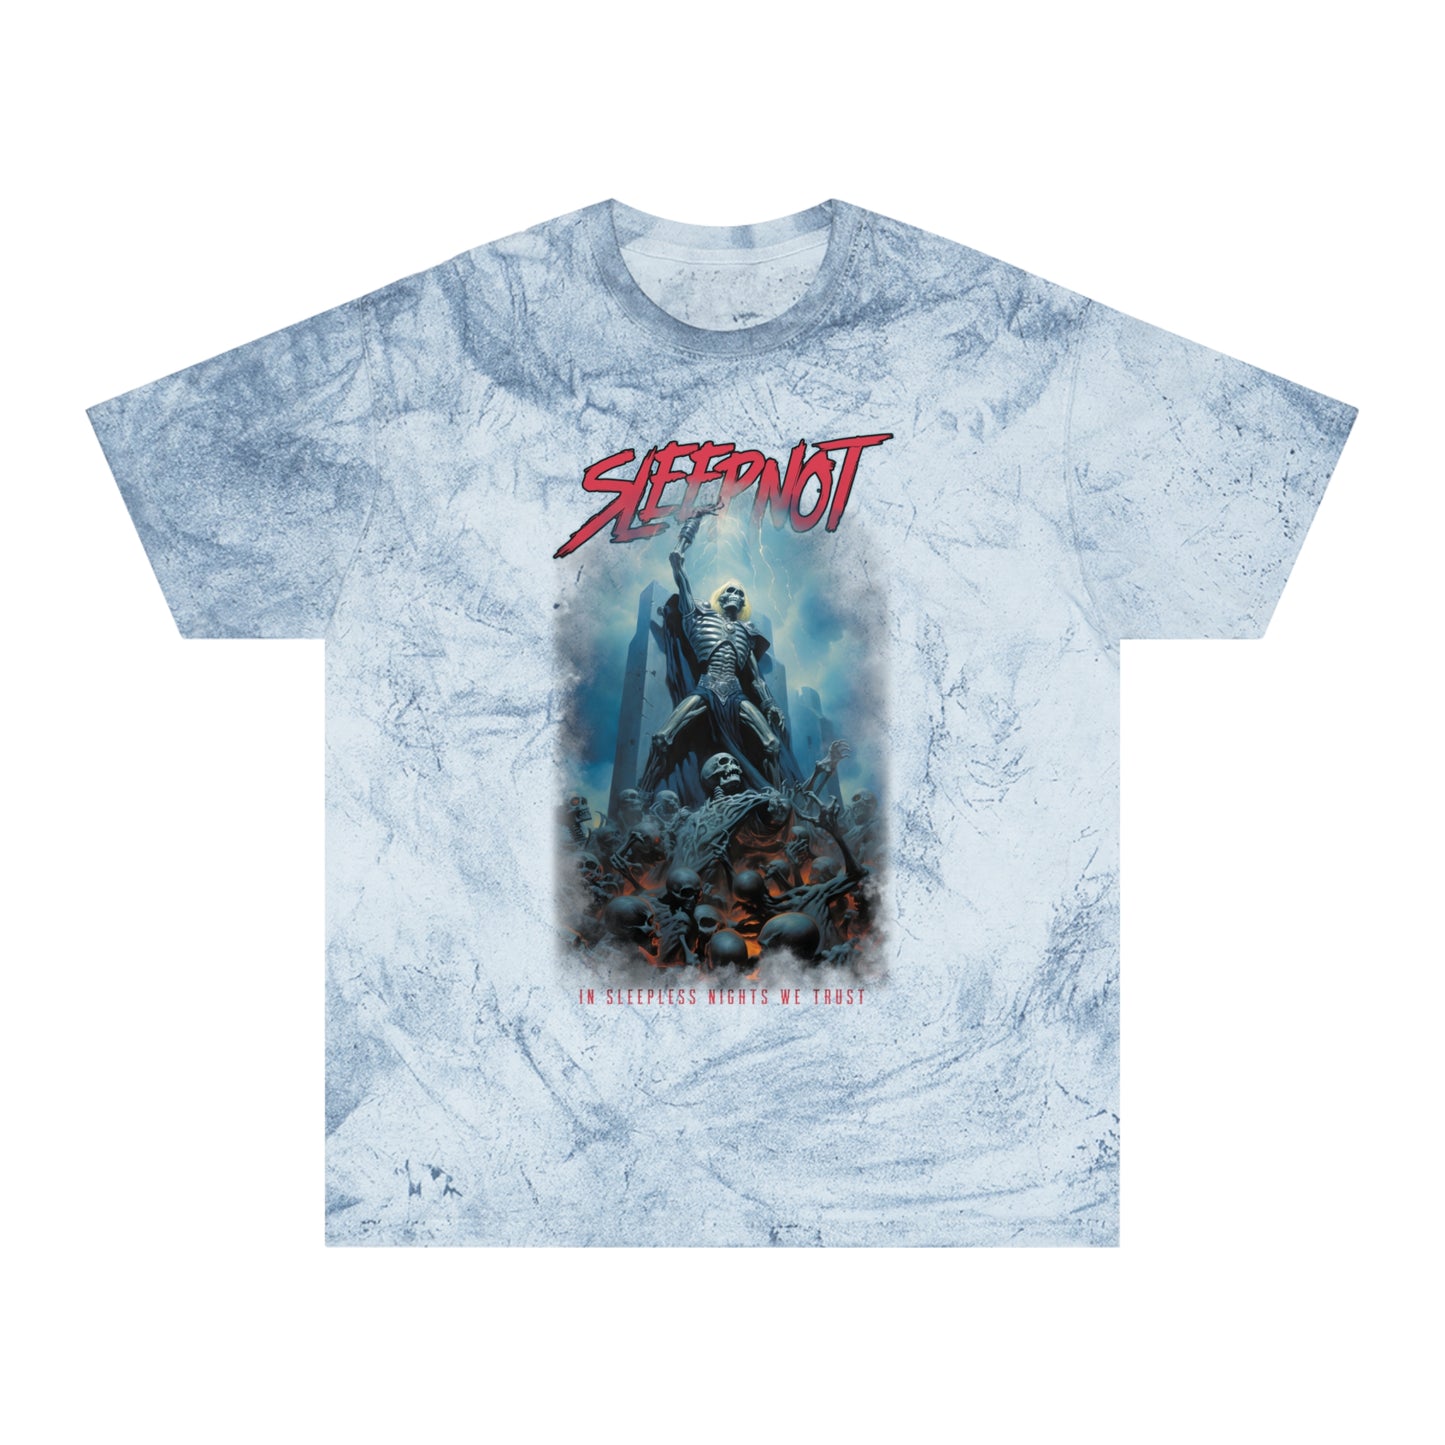 Sleepnot: Band Parody Shirt